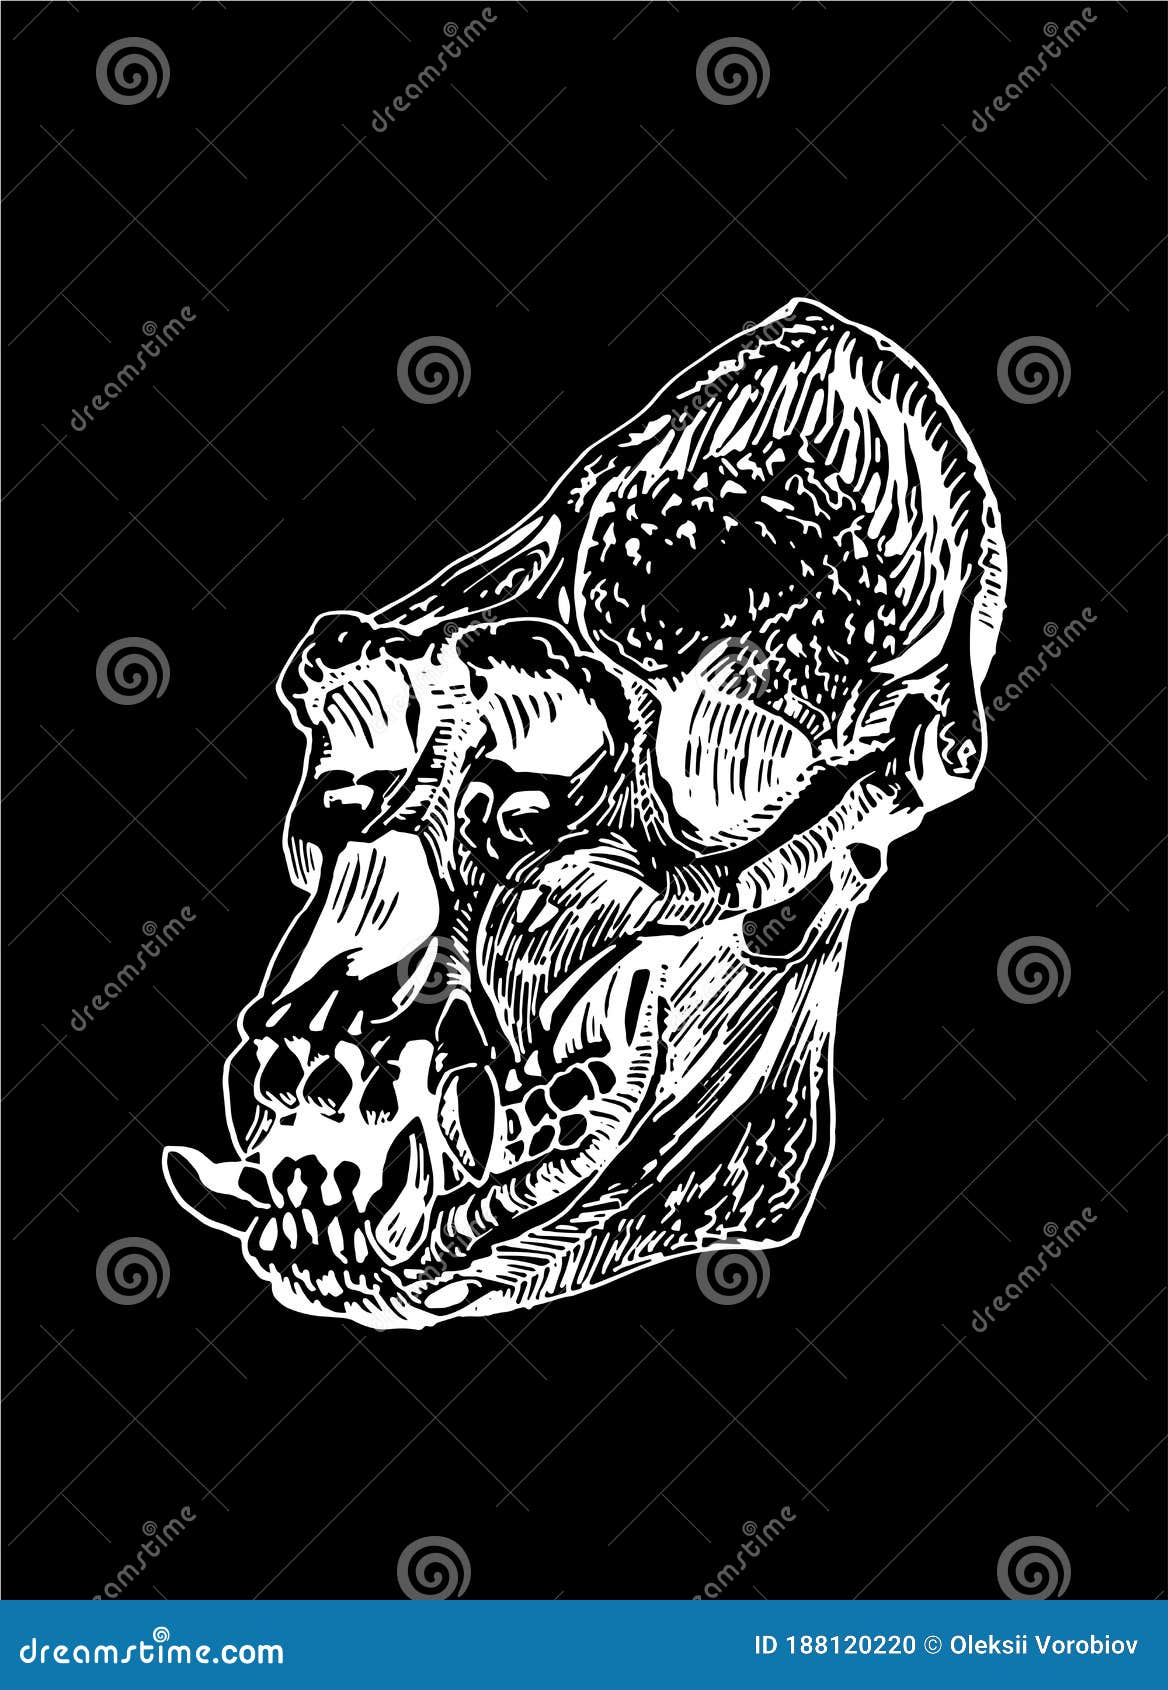 Kévin Plane on Instagram ink inked tattoo tattoos tattooed tattrx  btattooing blackwork dot draw dra  Skull tattoo design Skull  sketch Skull drawing